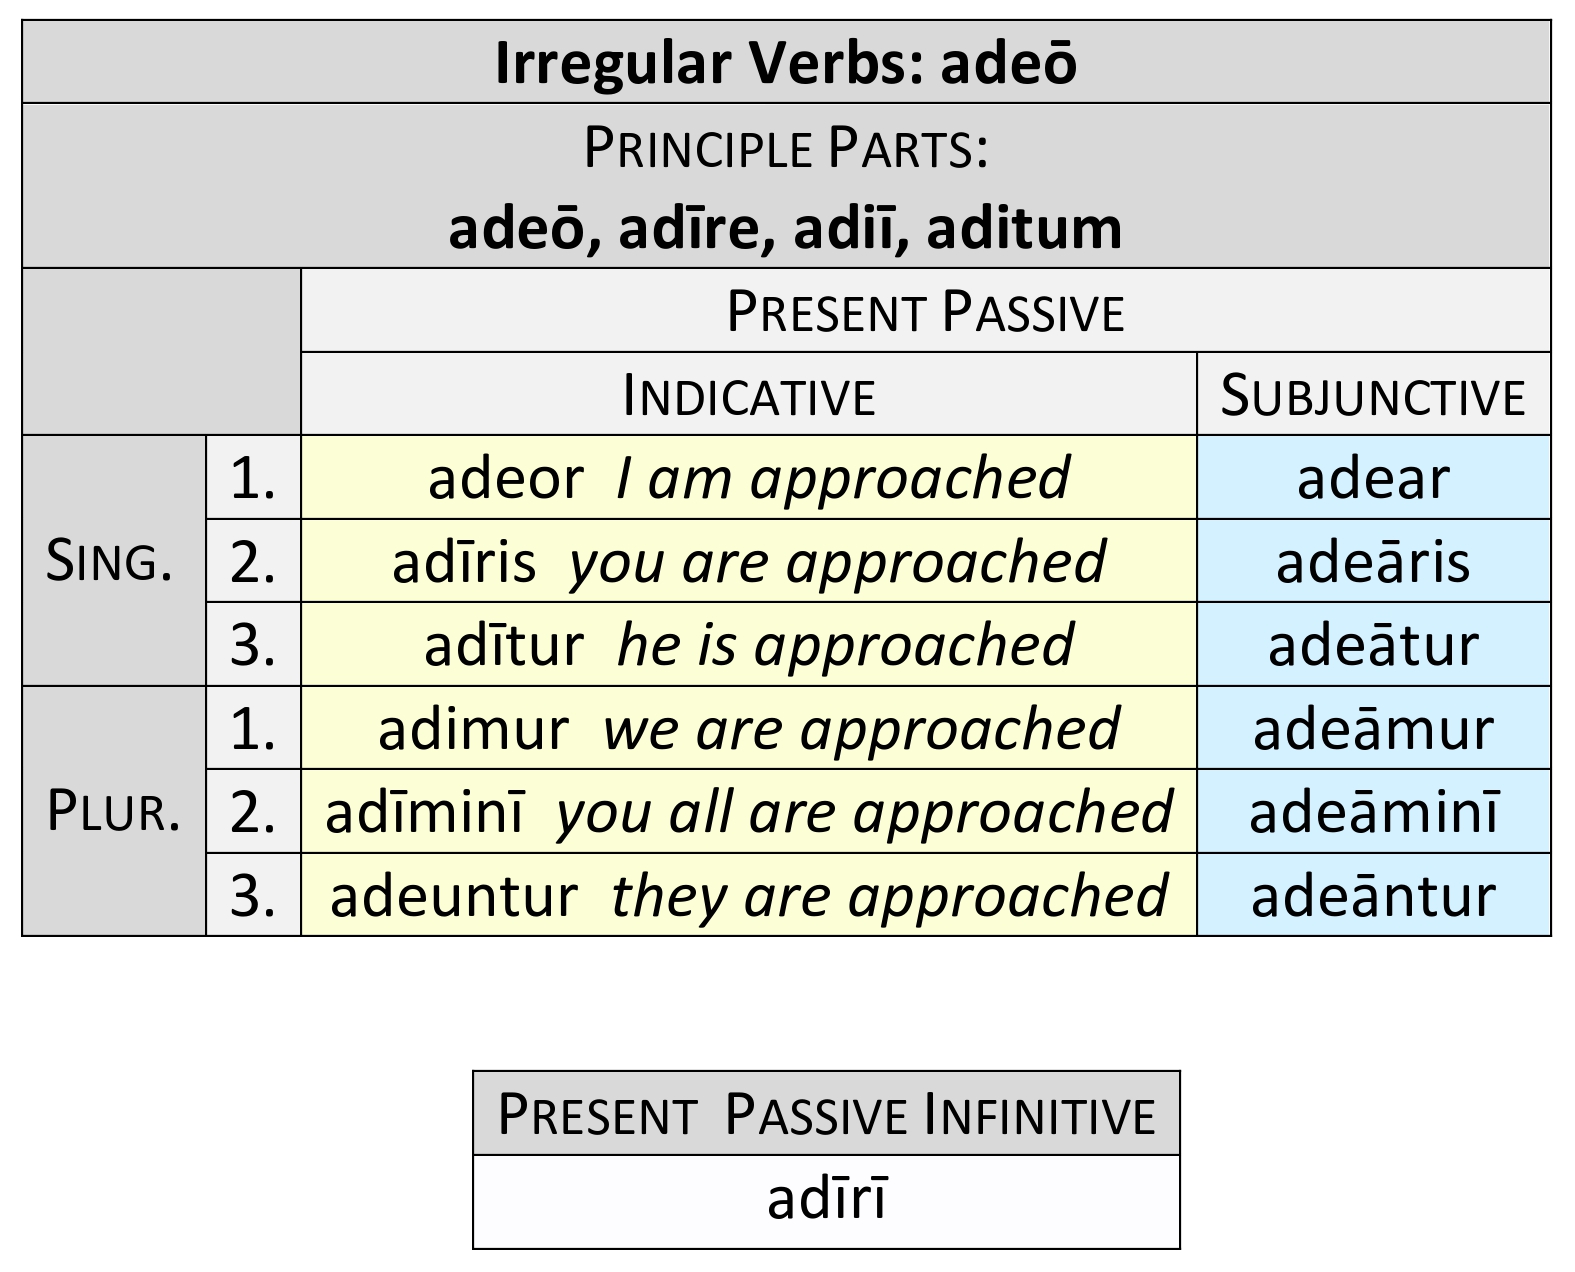 irregular verb adeō present passive paradigm